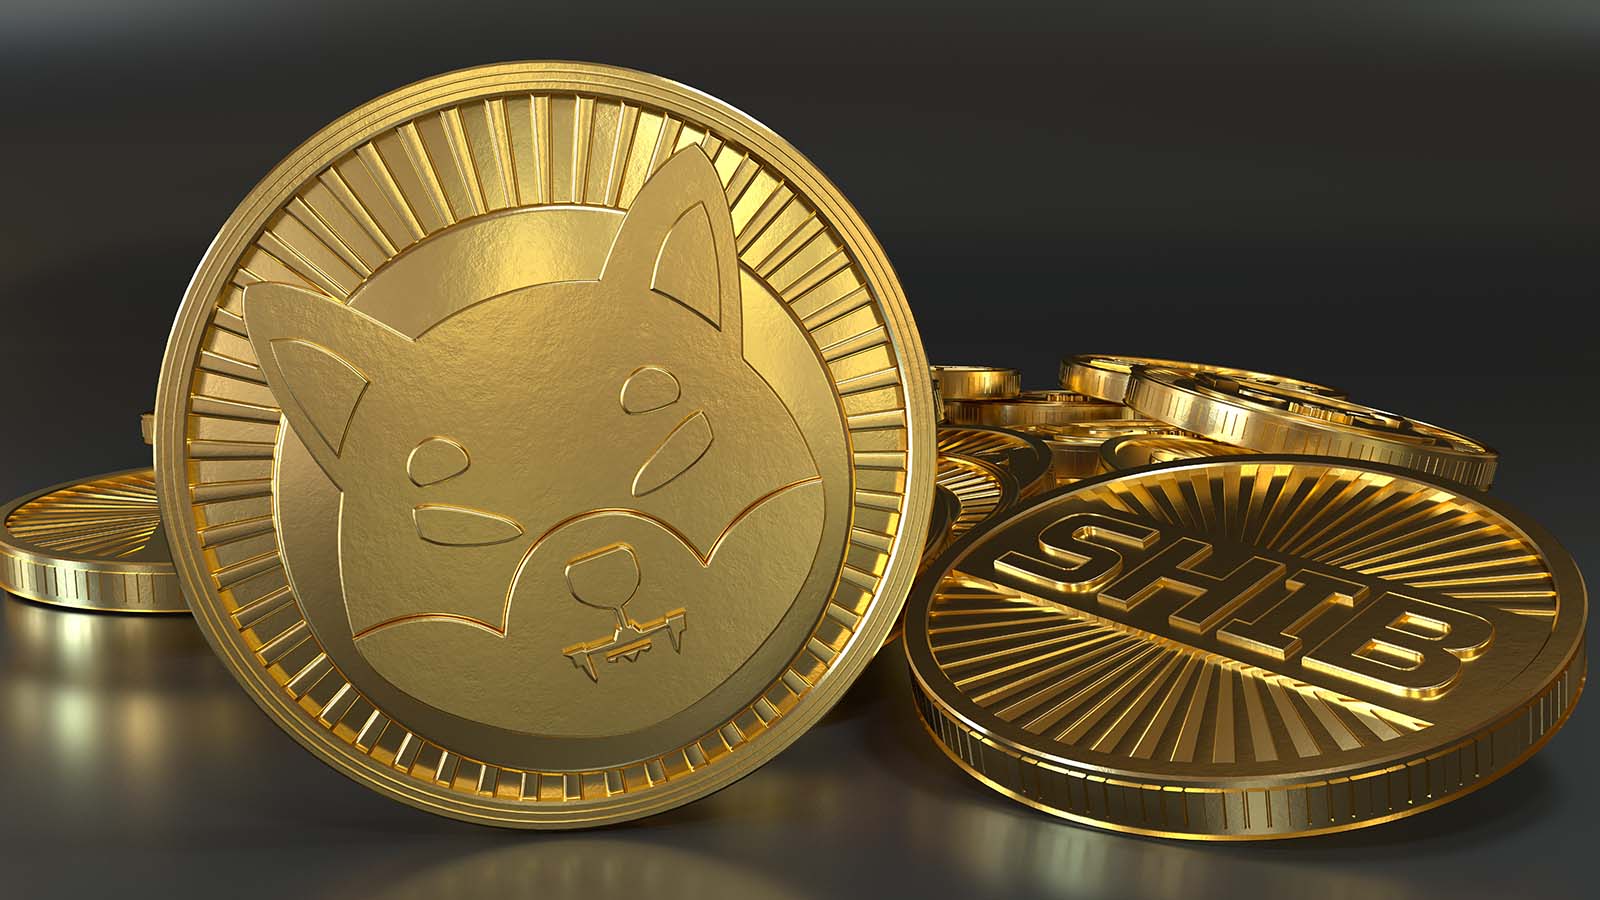 Concept art for the Shiba Inu cryptocurrency representing Shiba Inu Price Predictions.